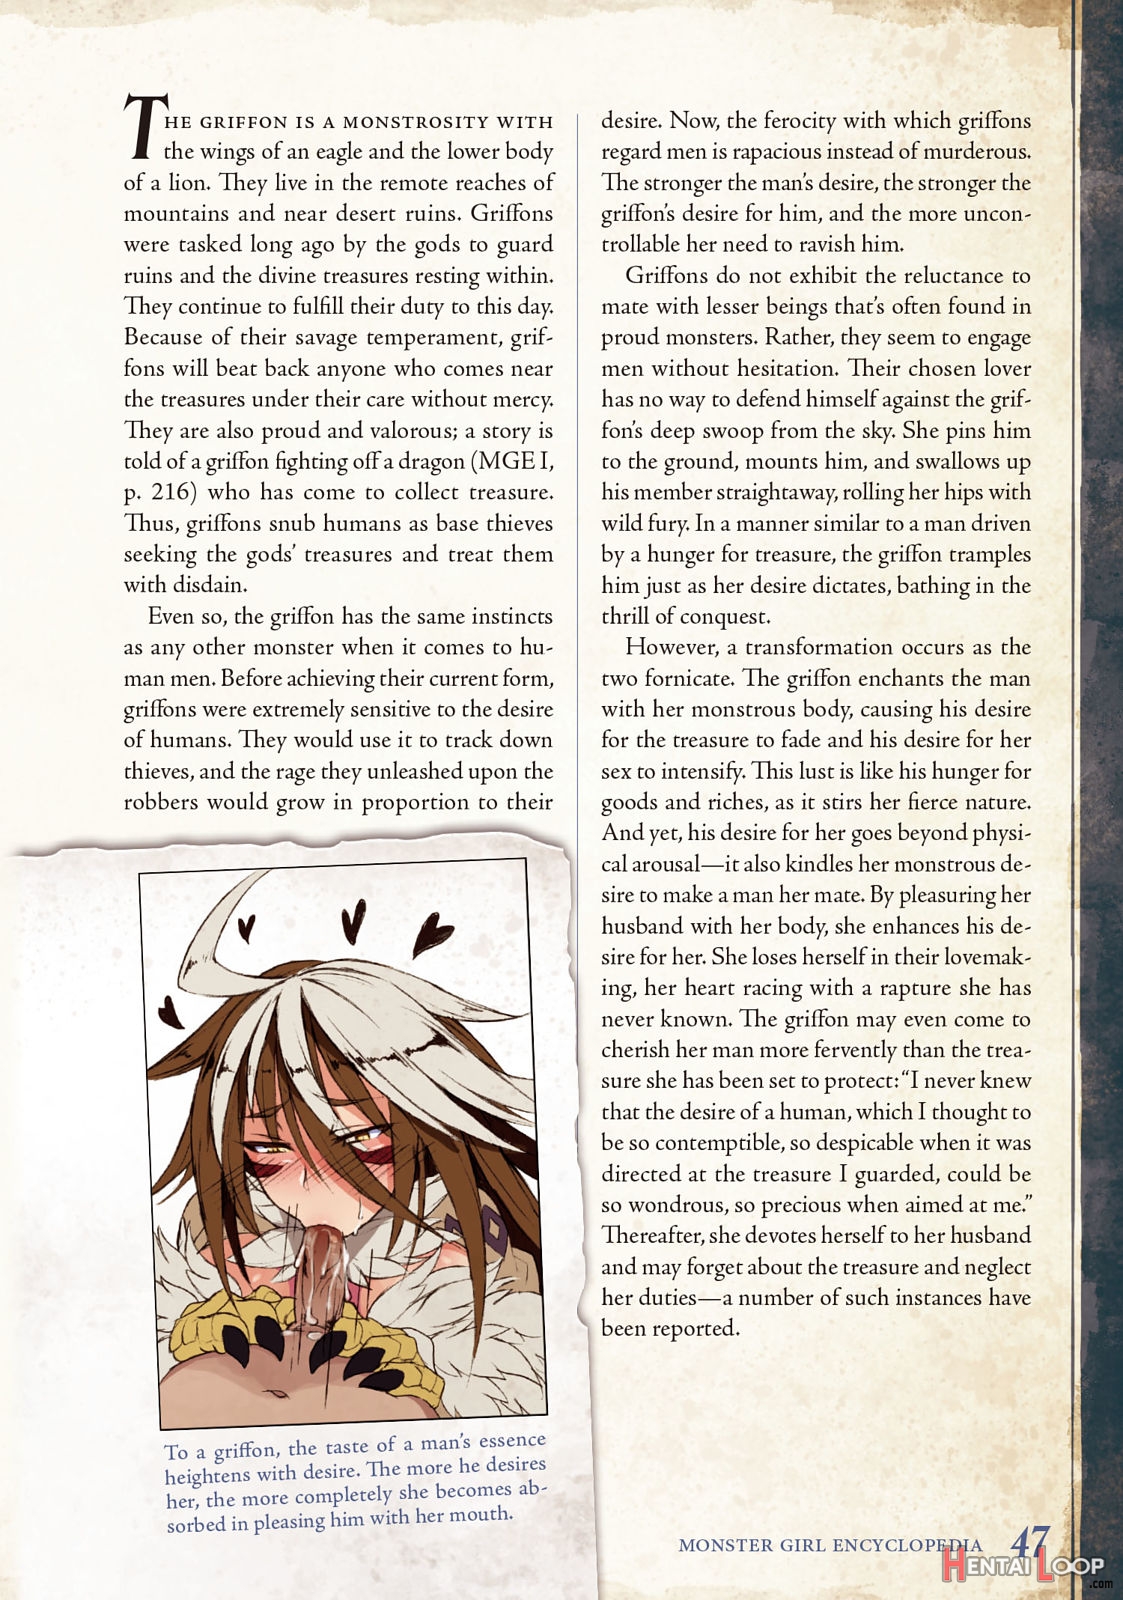 Monster Girl Encyclopedia Vol. 2 page 48